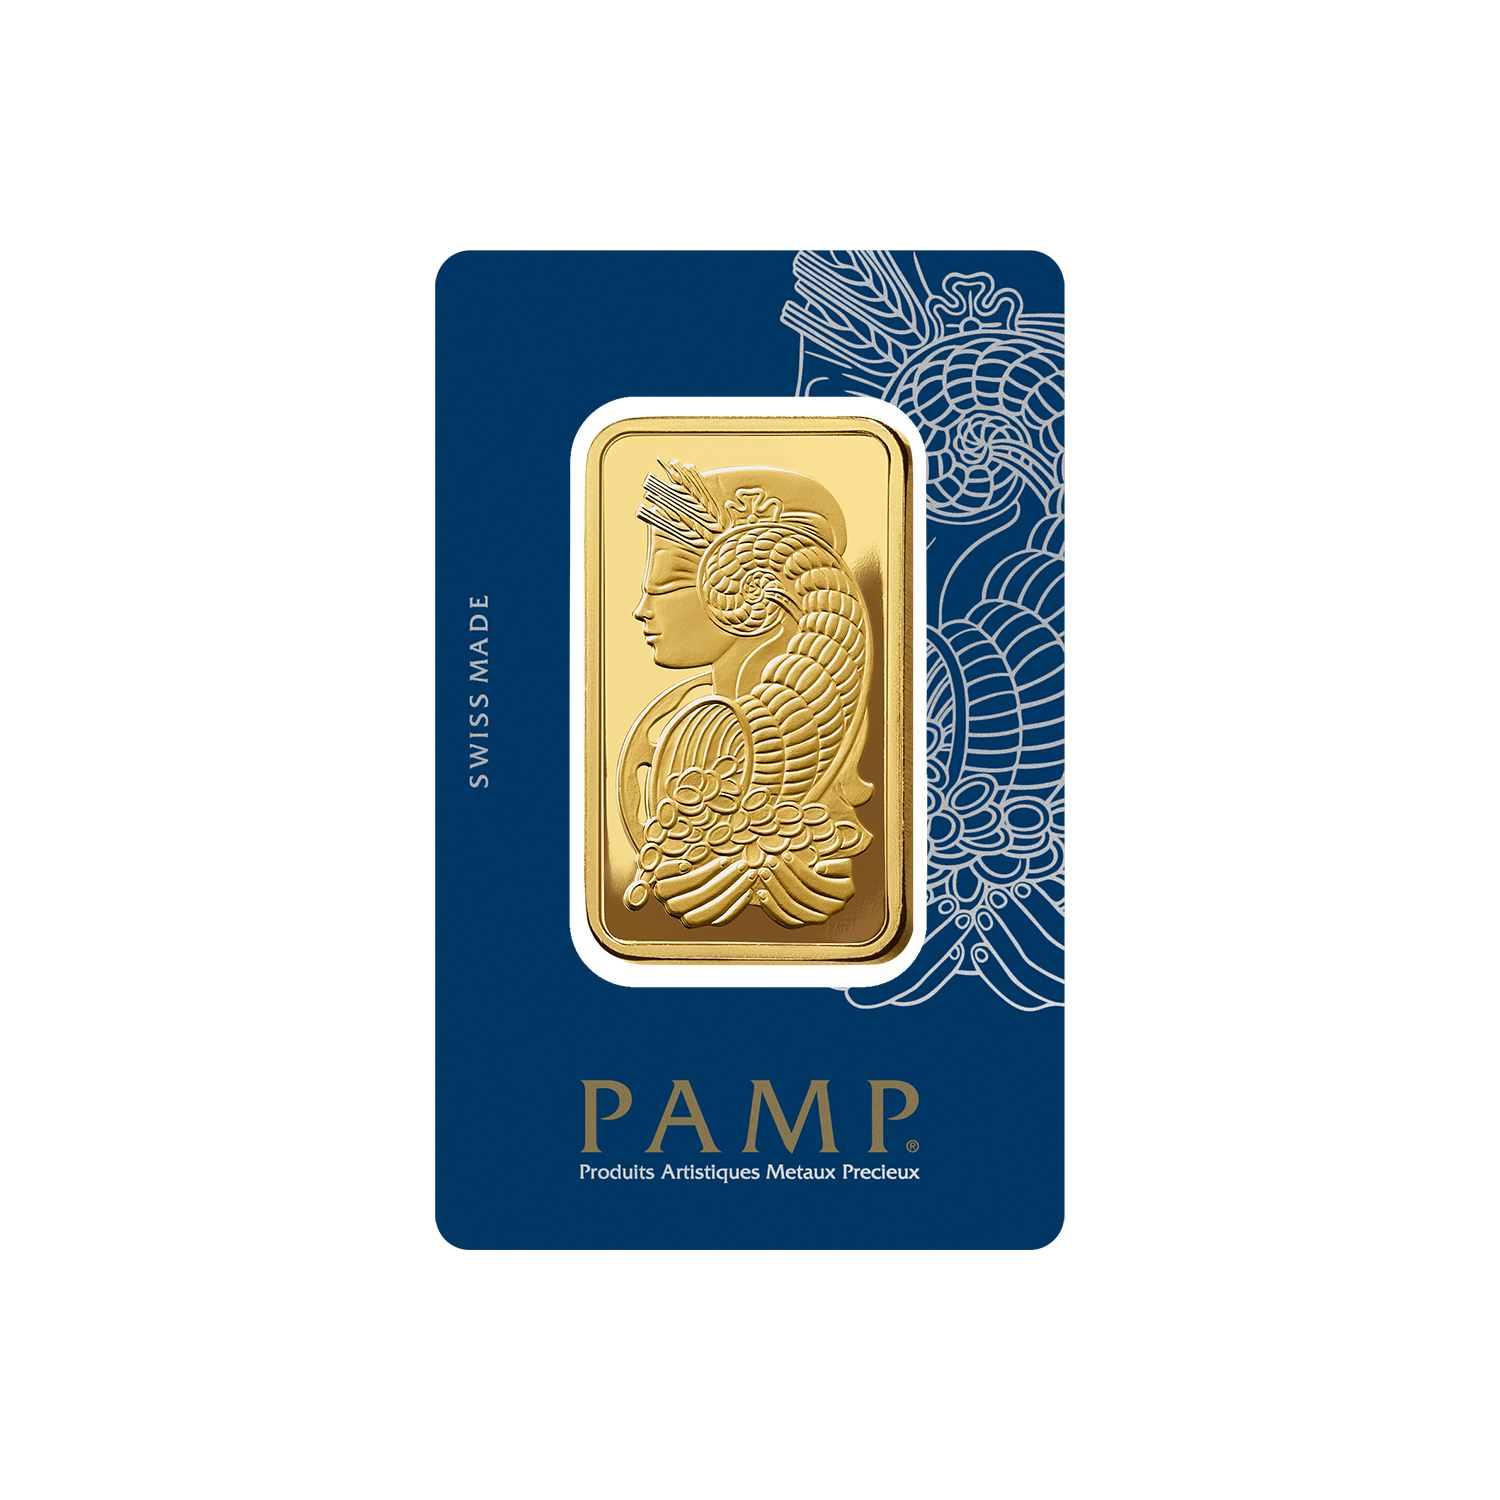 [50Gram] PAMP Fortuna Gold Minted Bar